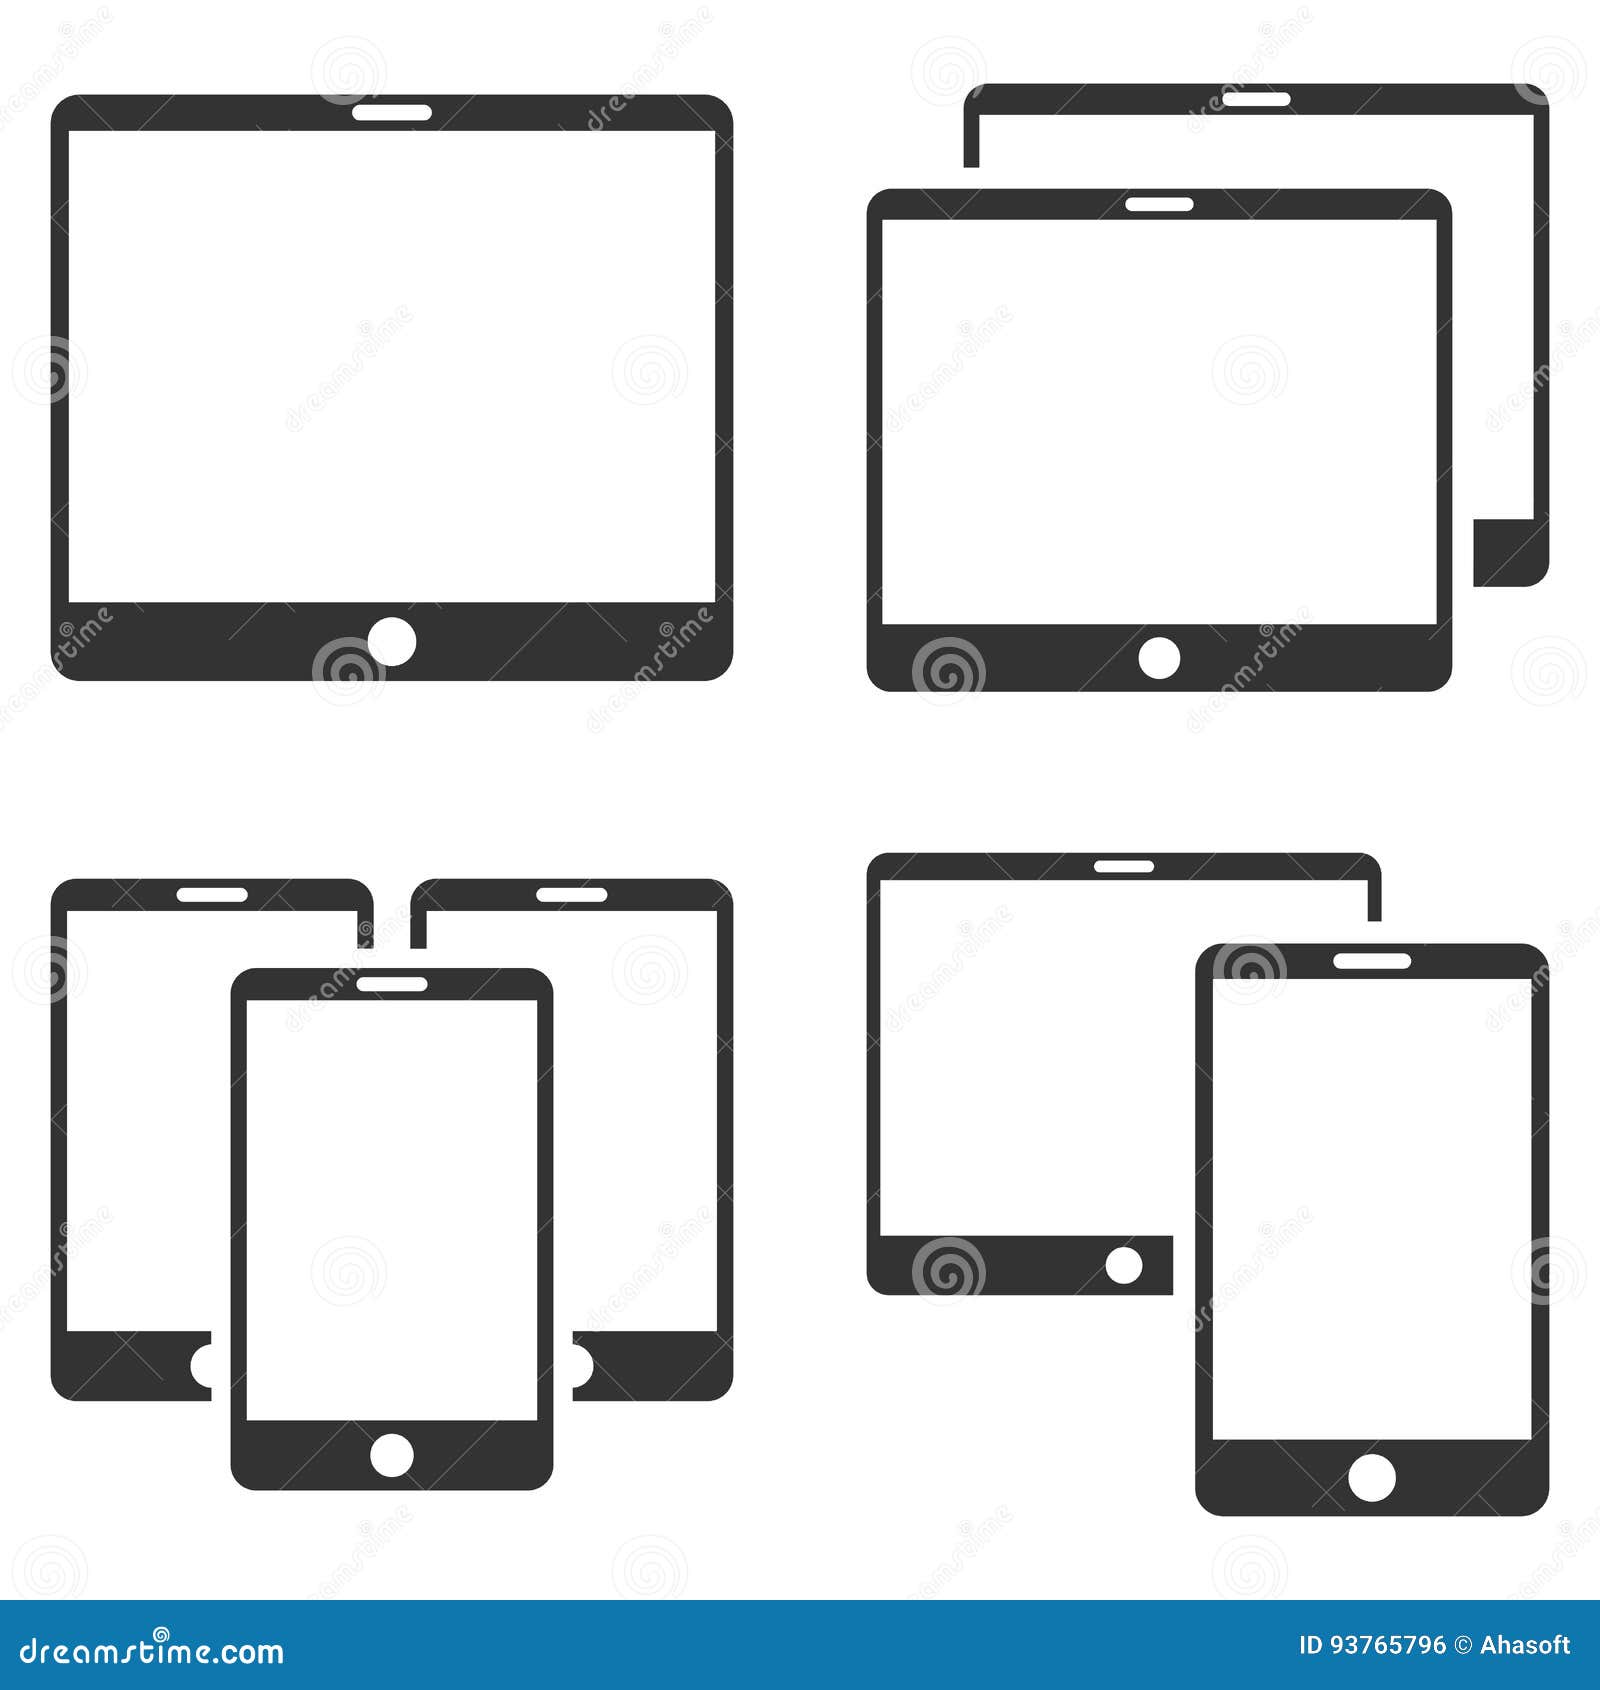 mobile device  flat icon set